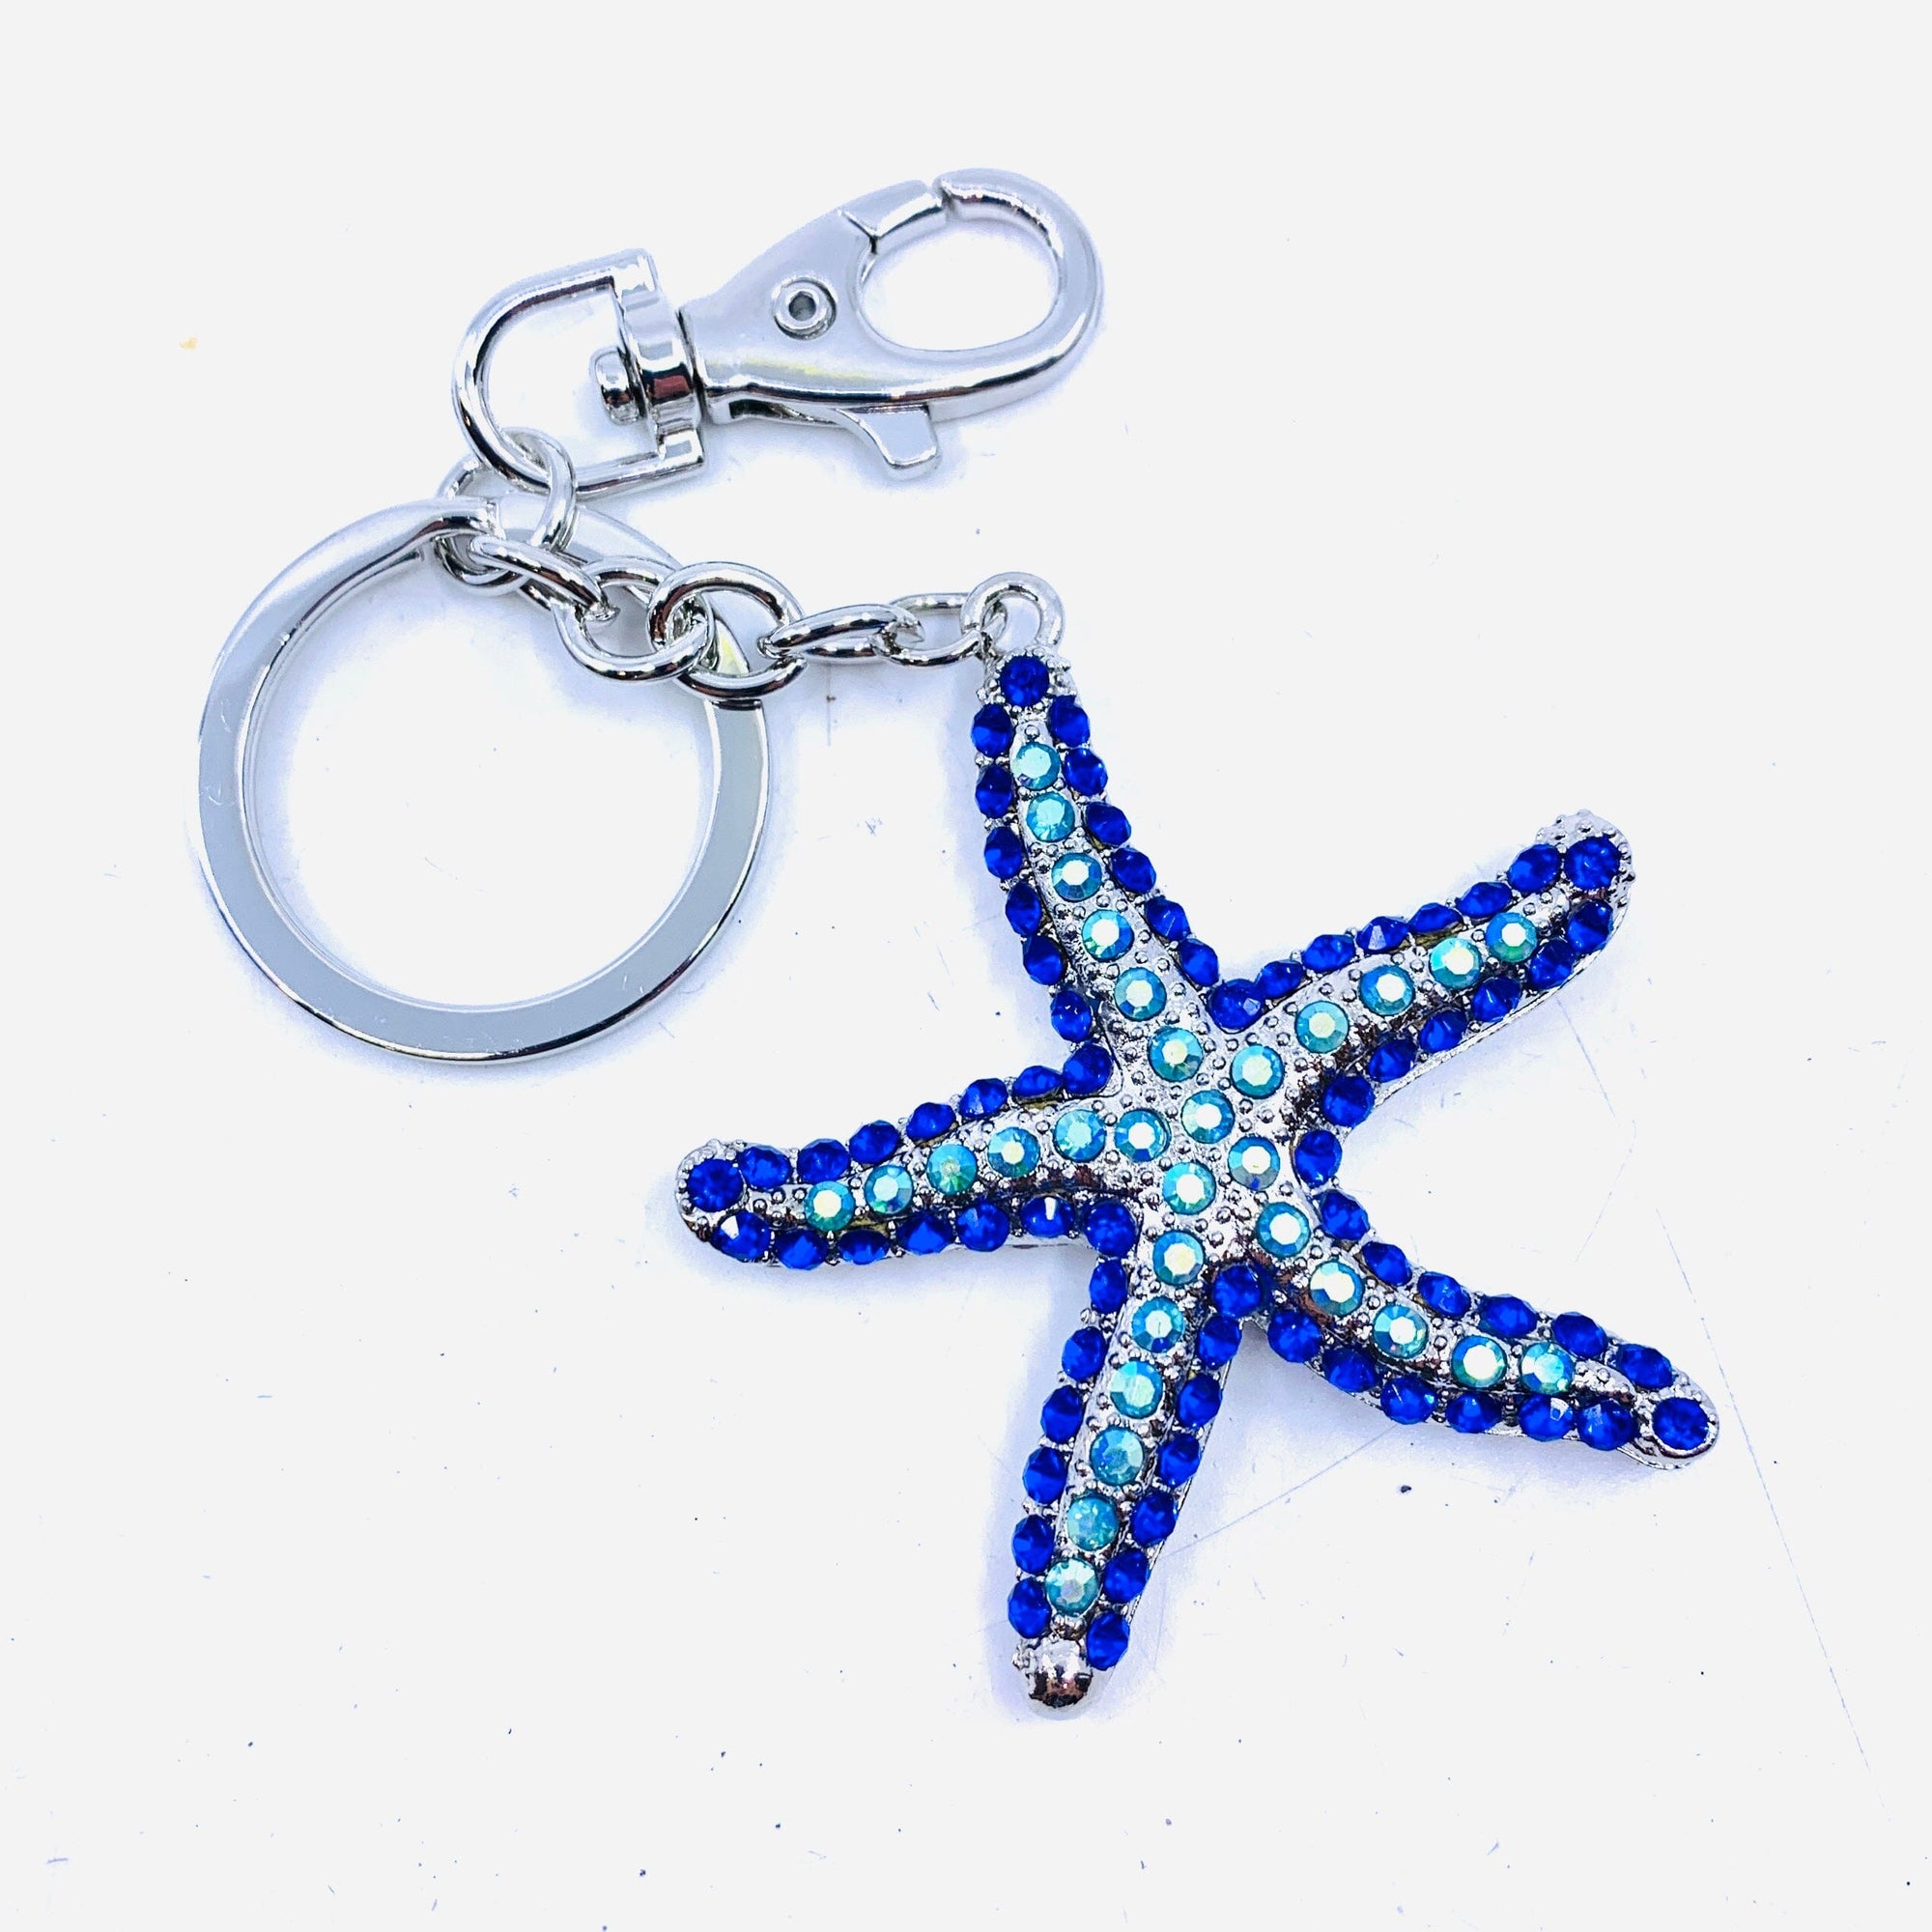 Bejeweled Key Chain 2, Star Fish Accessory Kubla Craft 